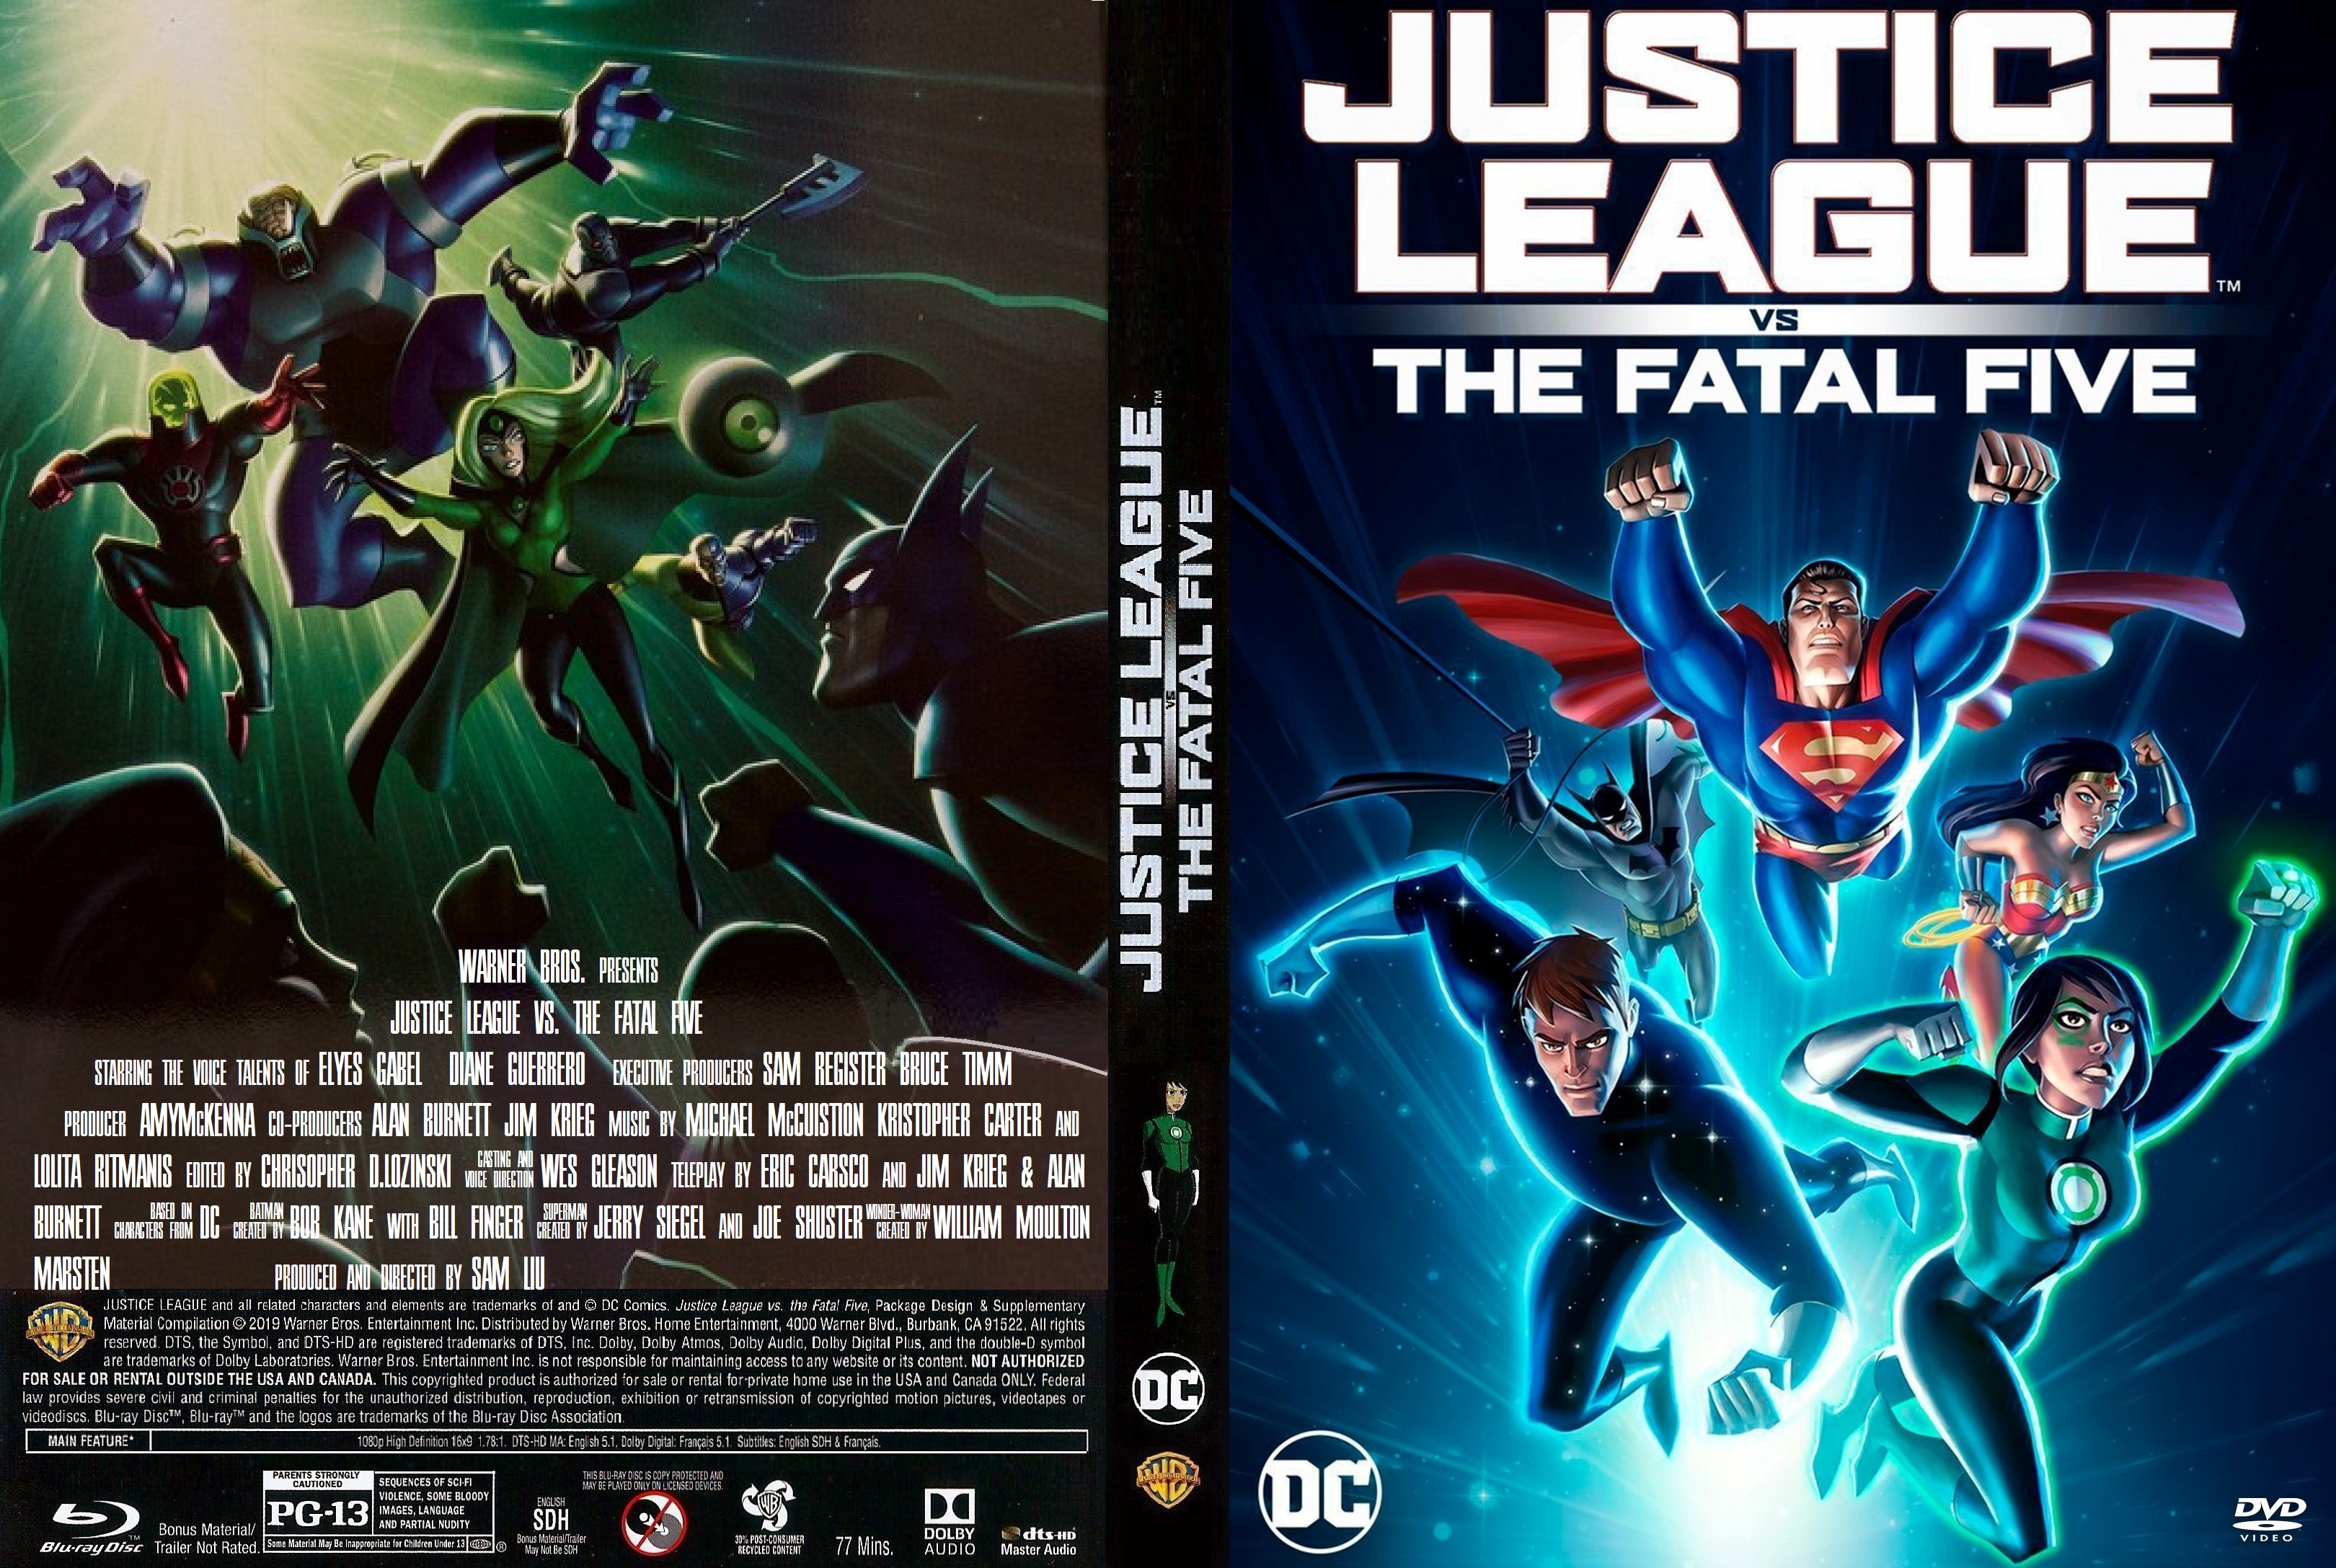 Jaquette DVD Justice League VS The Fatal Five custom v2